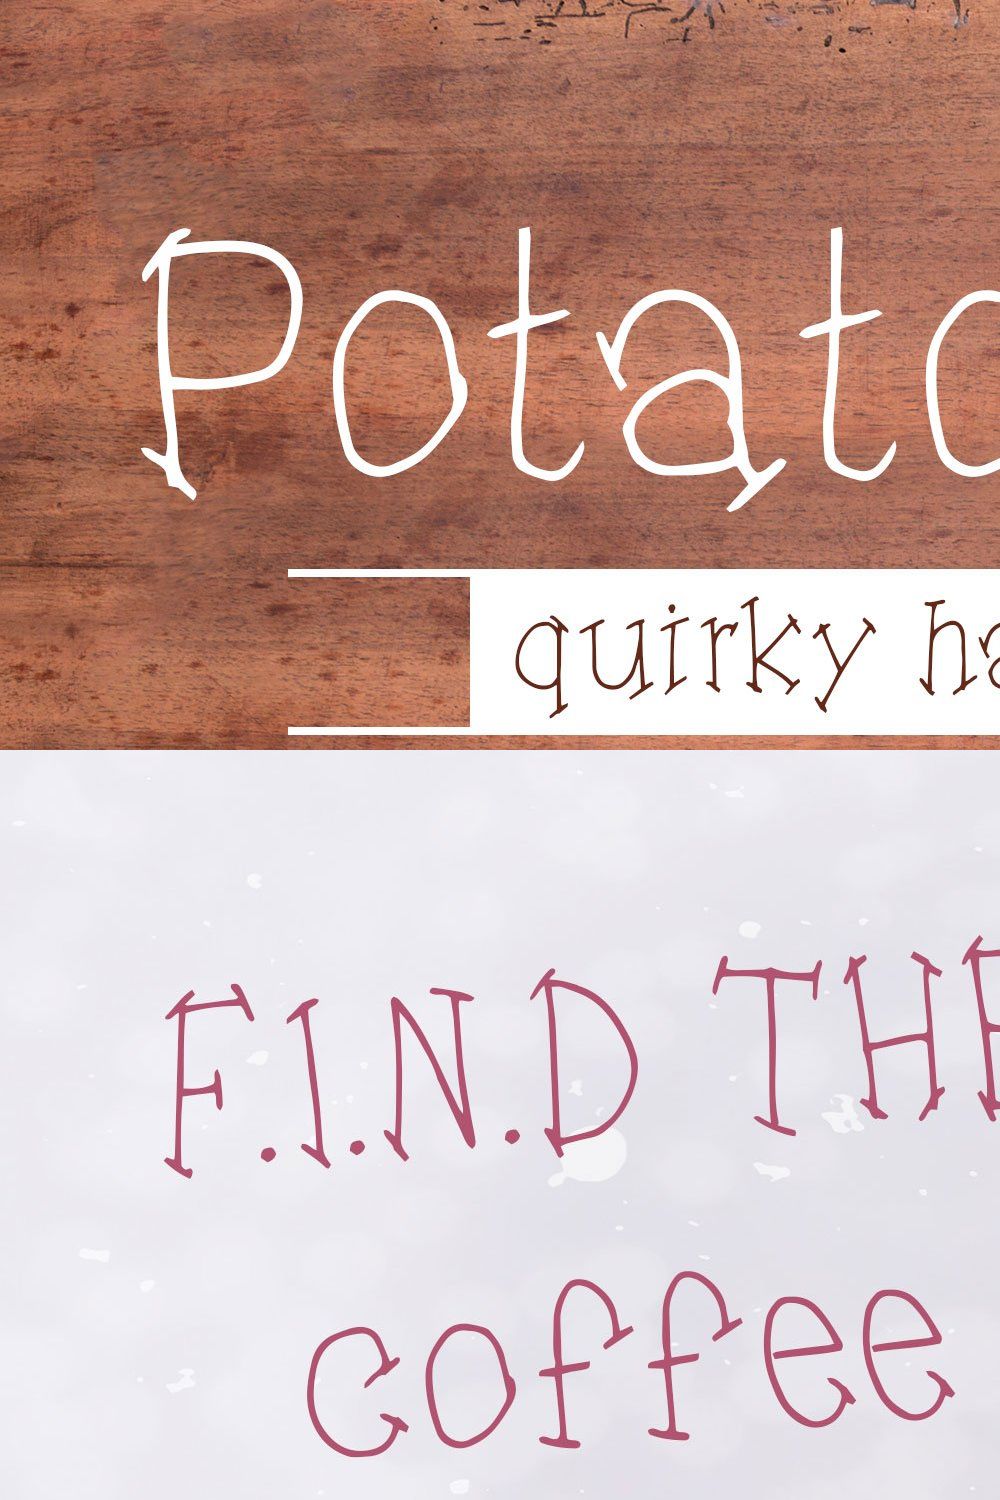 Potato Kukiry - Quirky Fun Font pinterest preview image.